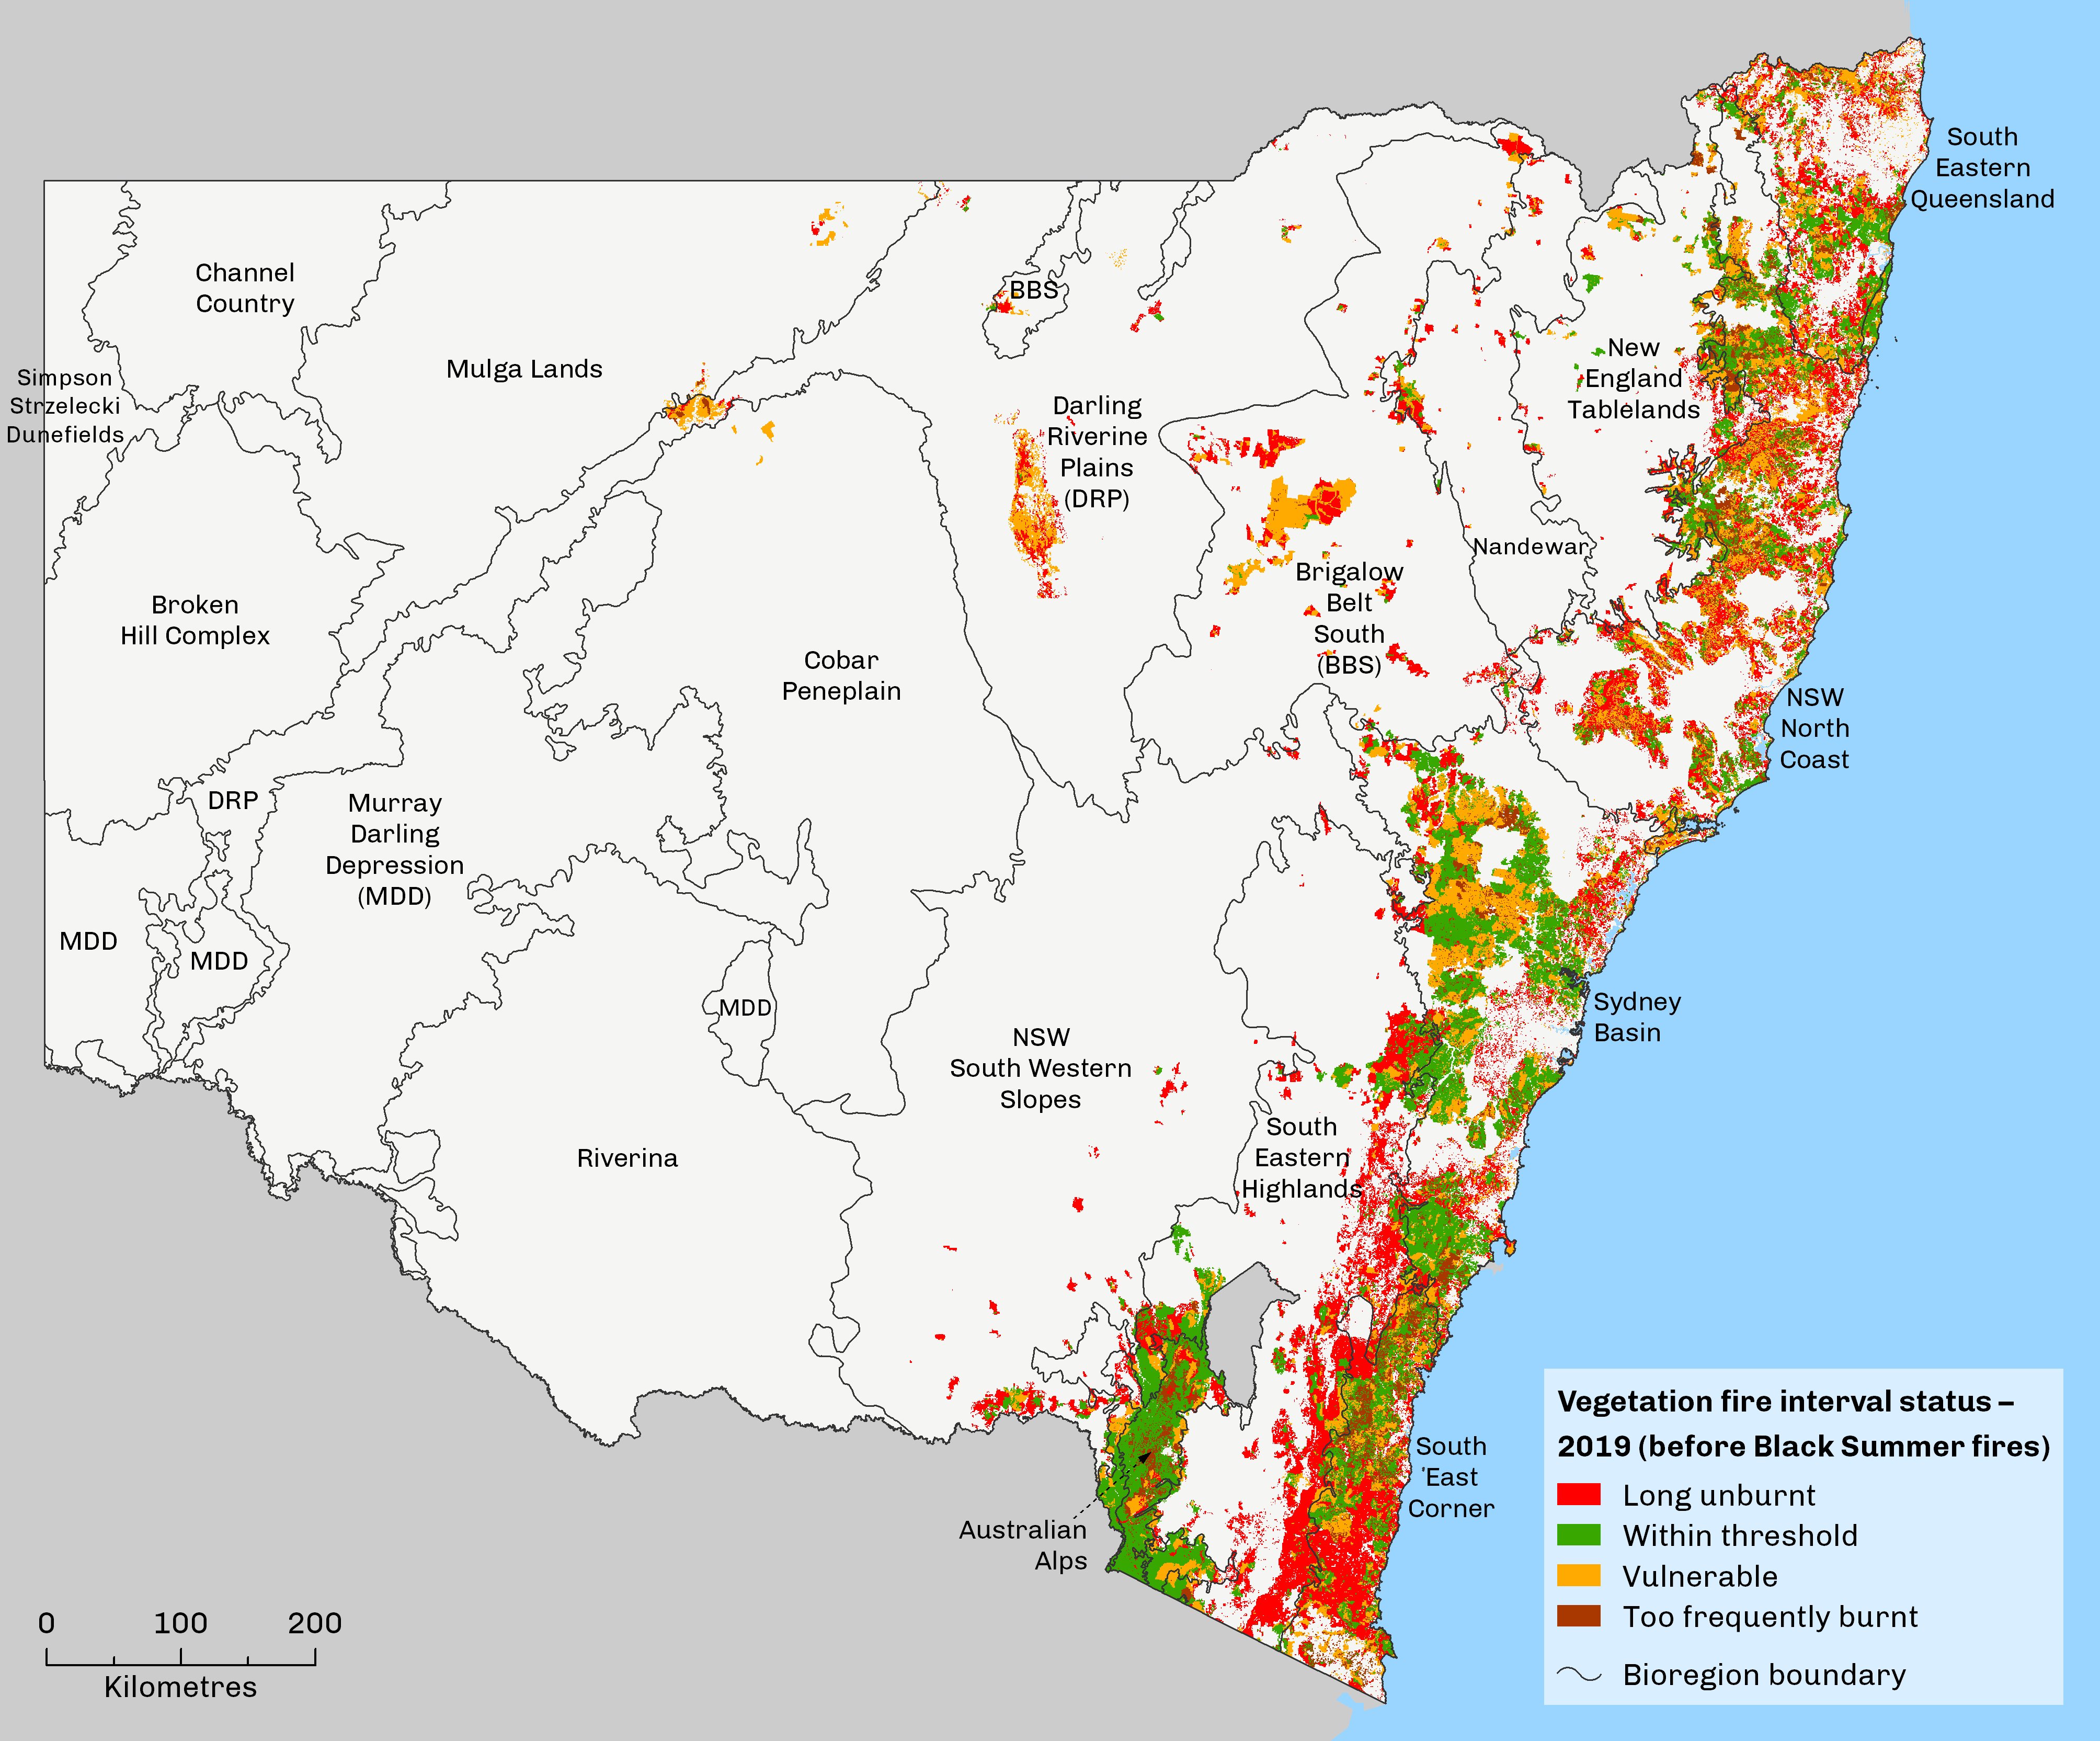 Map showing vegetation fire threshold status, before black summer fires